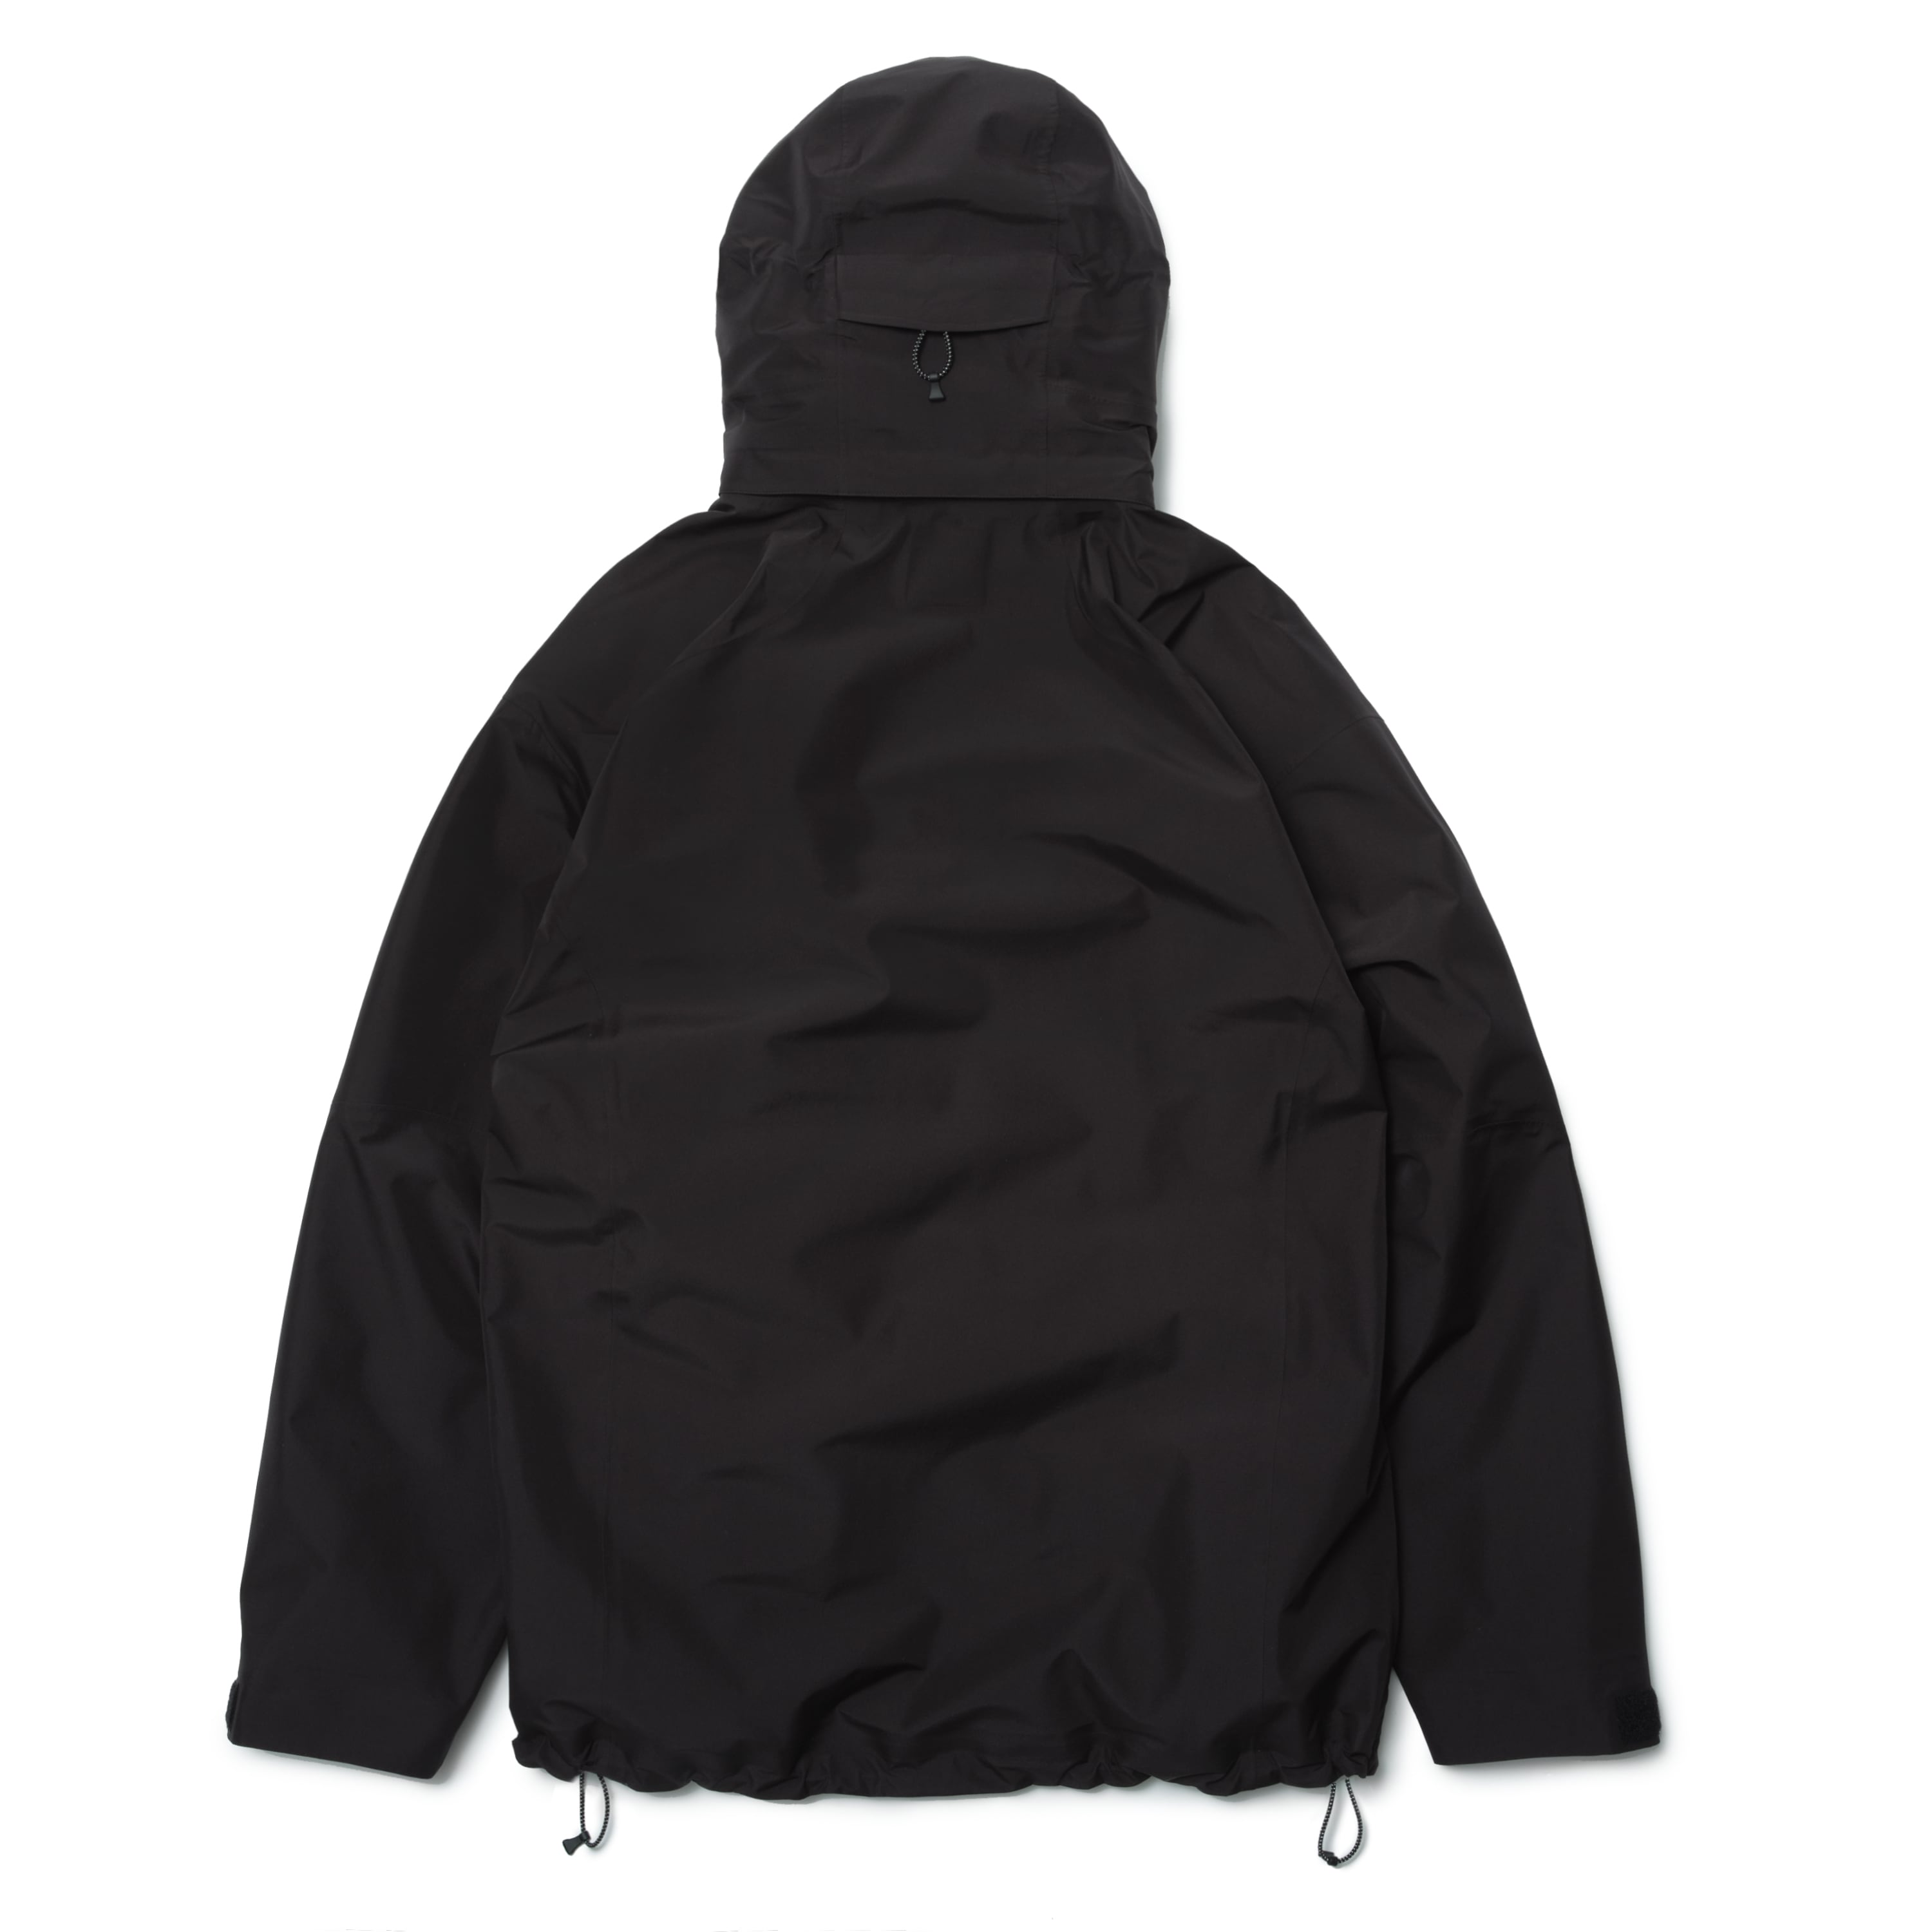 [AKAD038] Alwayth all weather proof shell jacket by AKAD - BLACK